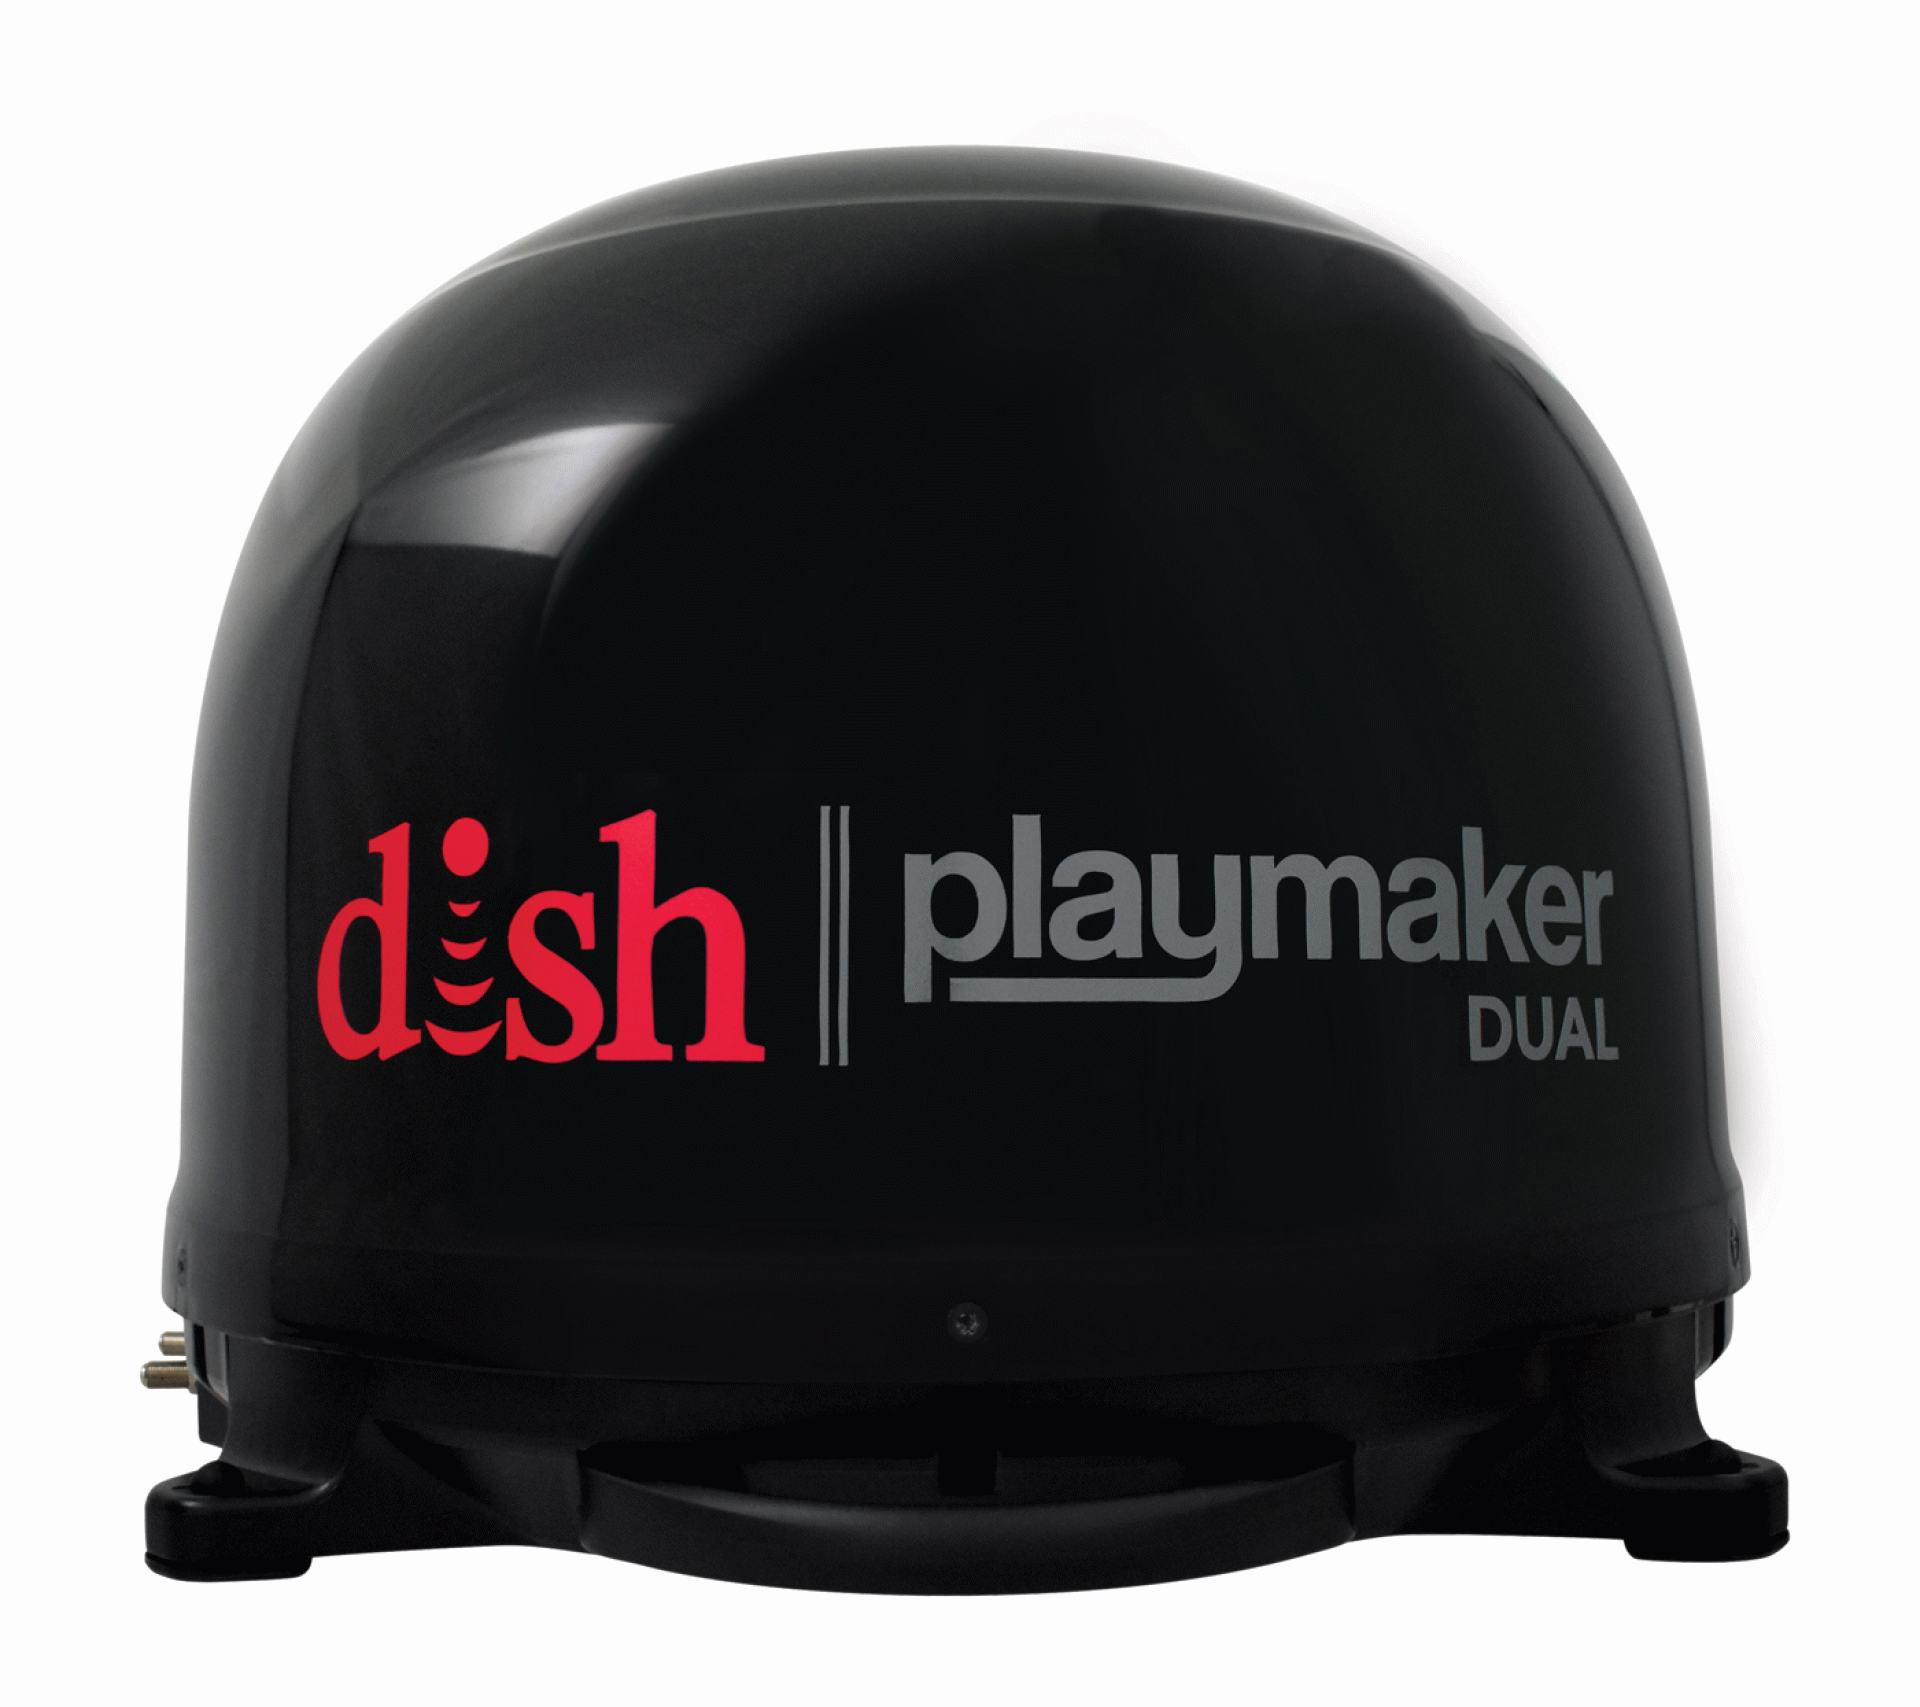 WINEGARD COMPANY | PL-8035 | Winegard Dish Playmaker Dual Portable Automatic Satellite Black